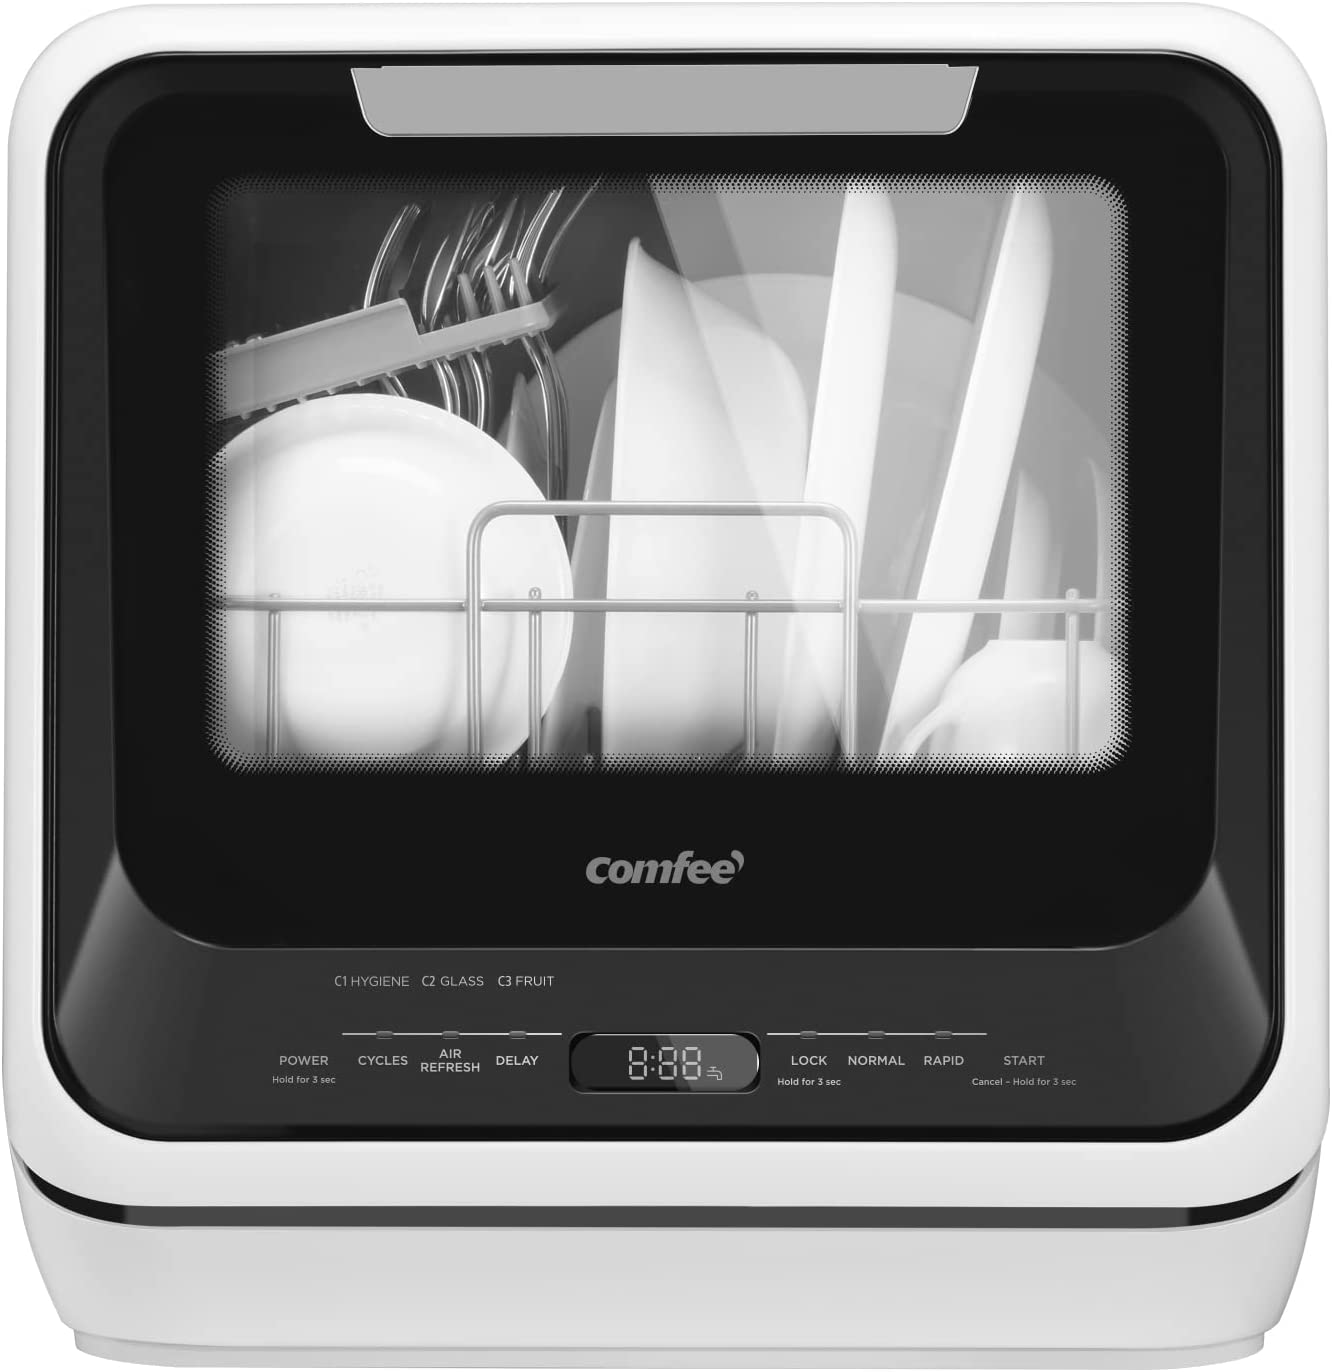 HAVA TDQR01 Compact Countertop Dishwasher User Manual